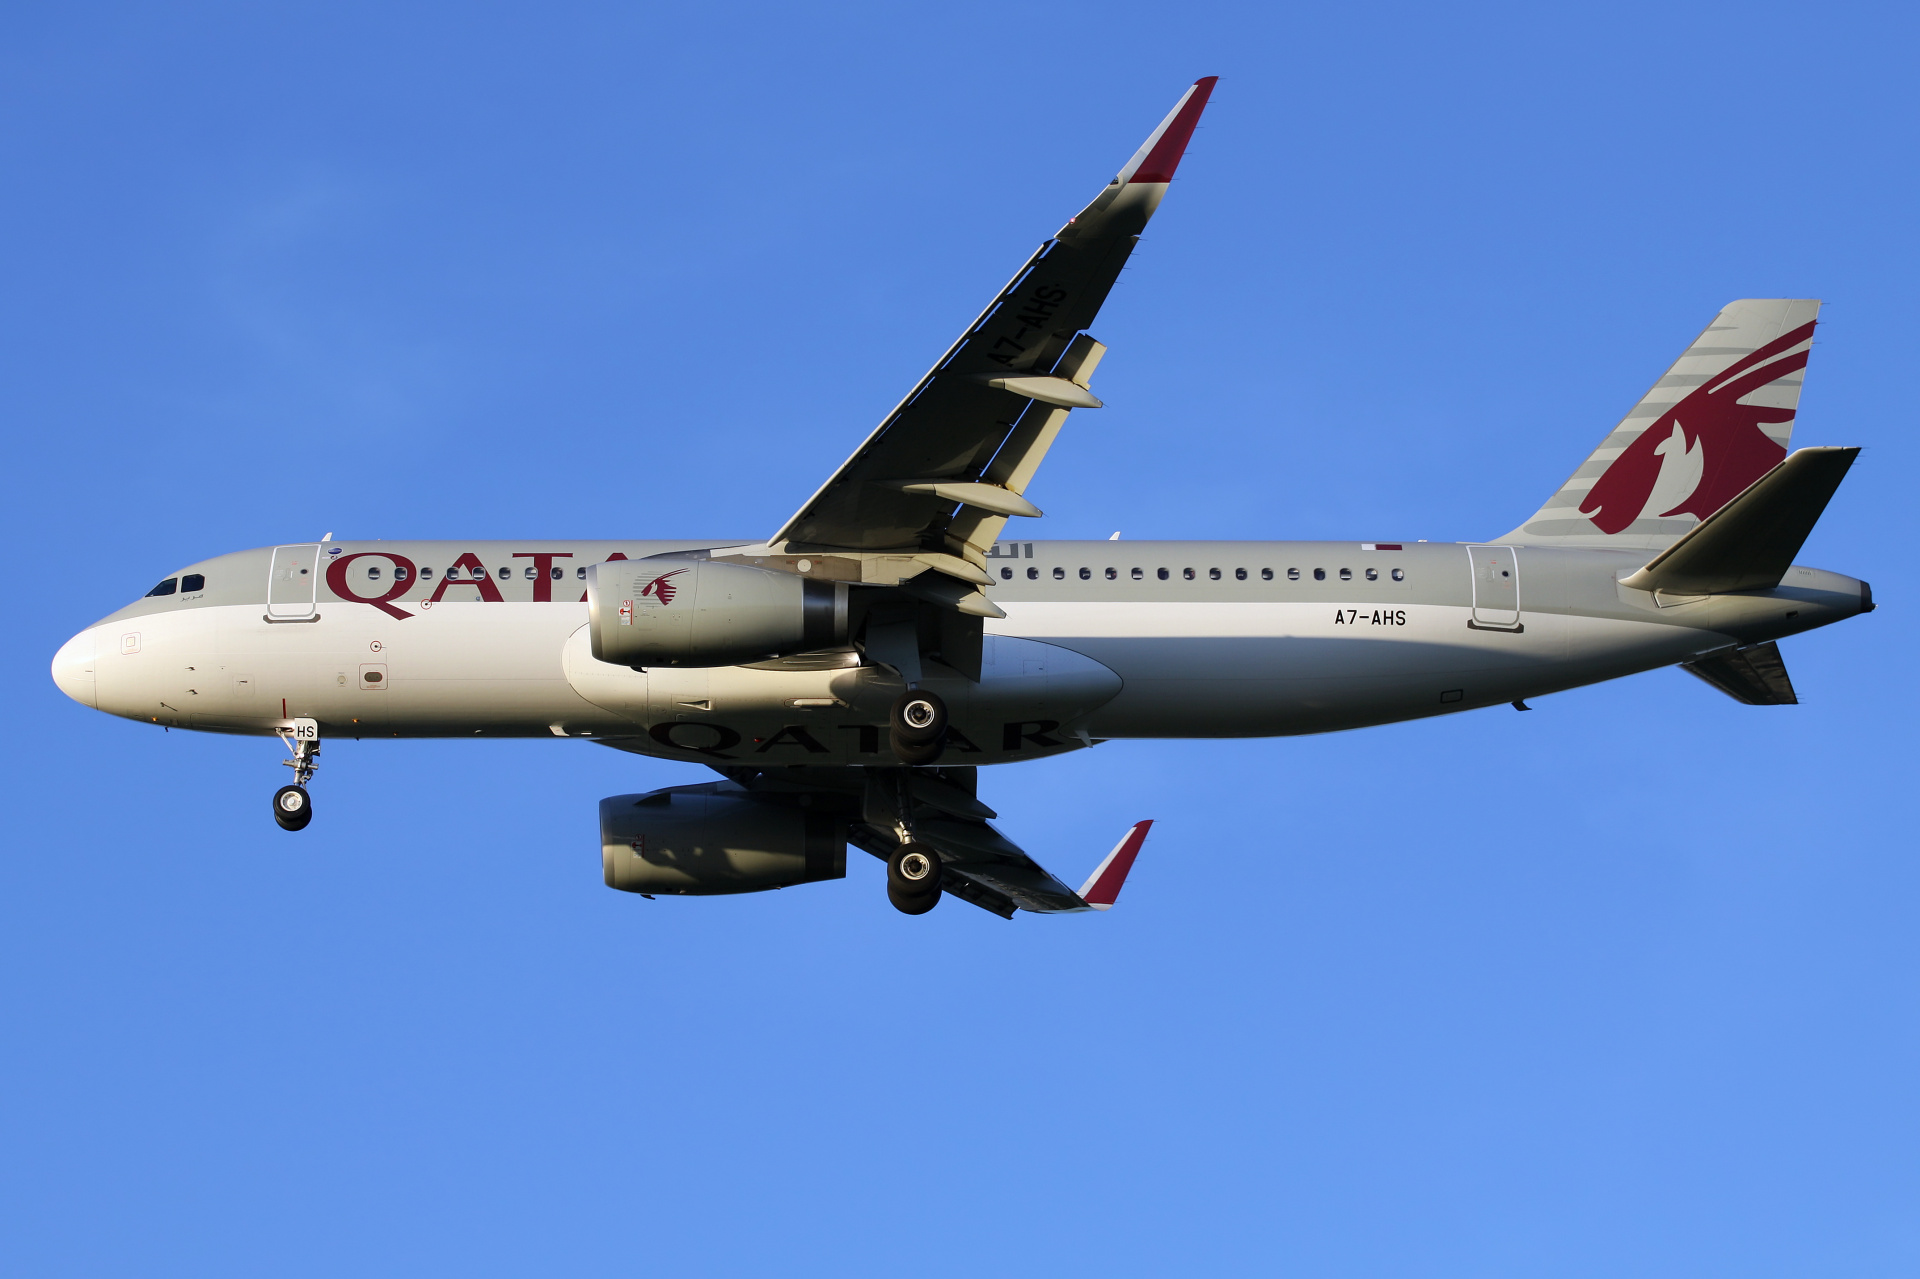 A7-AHS (sharklets) (Aircraft » EPWA Spotting » Airbus A320-200 » Qatar Airways)